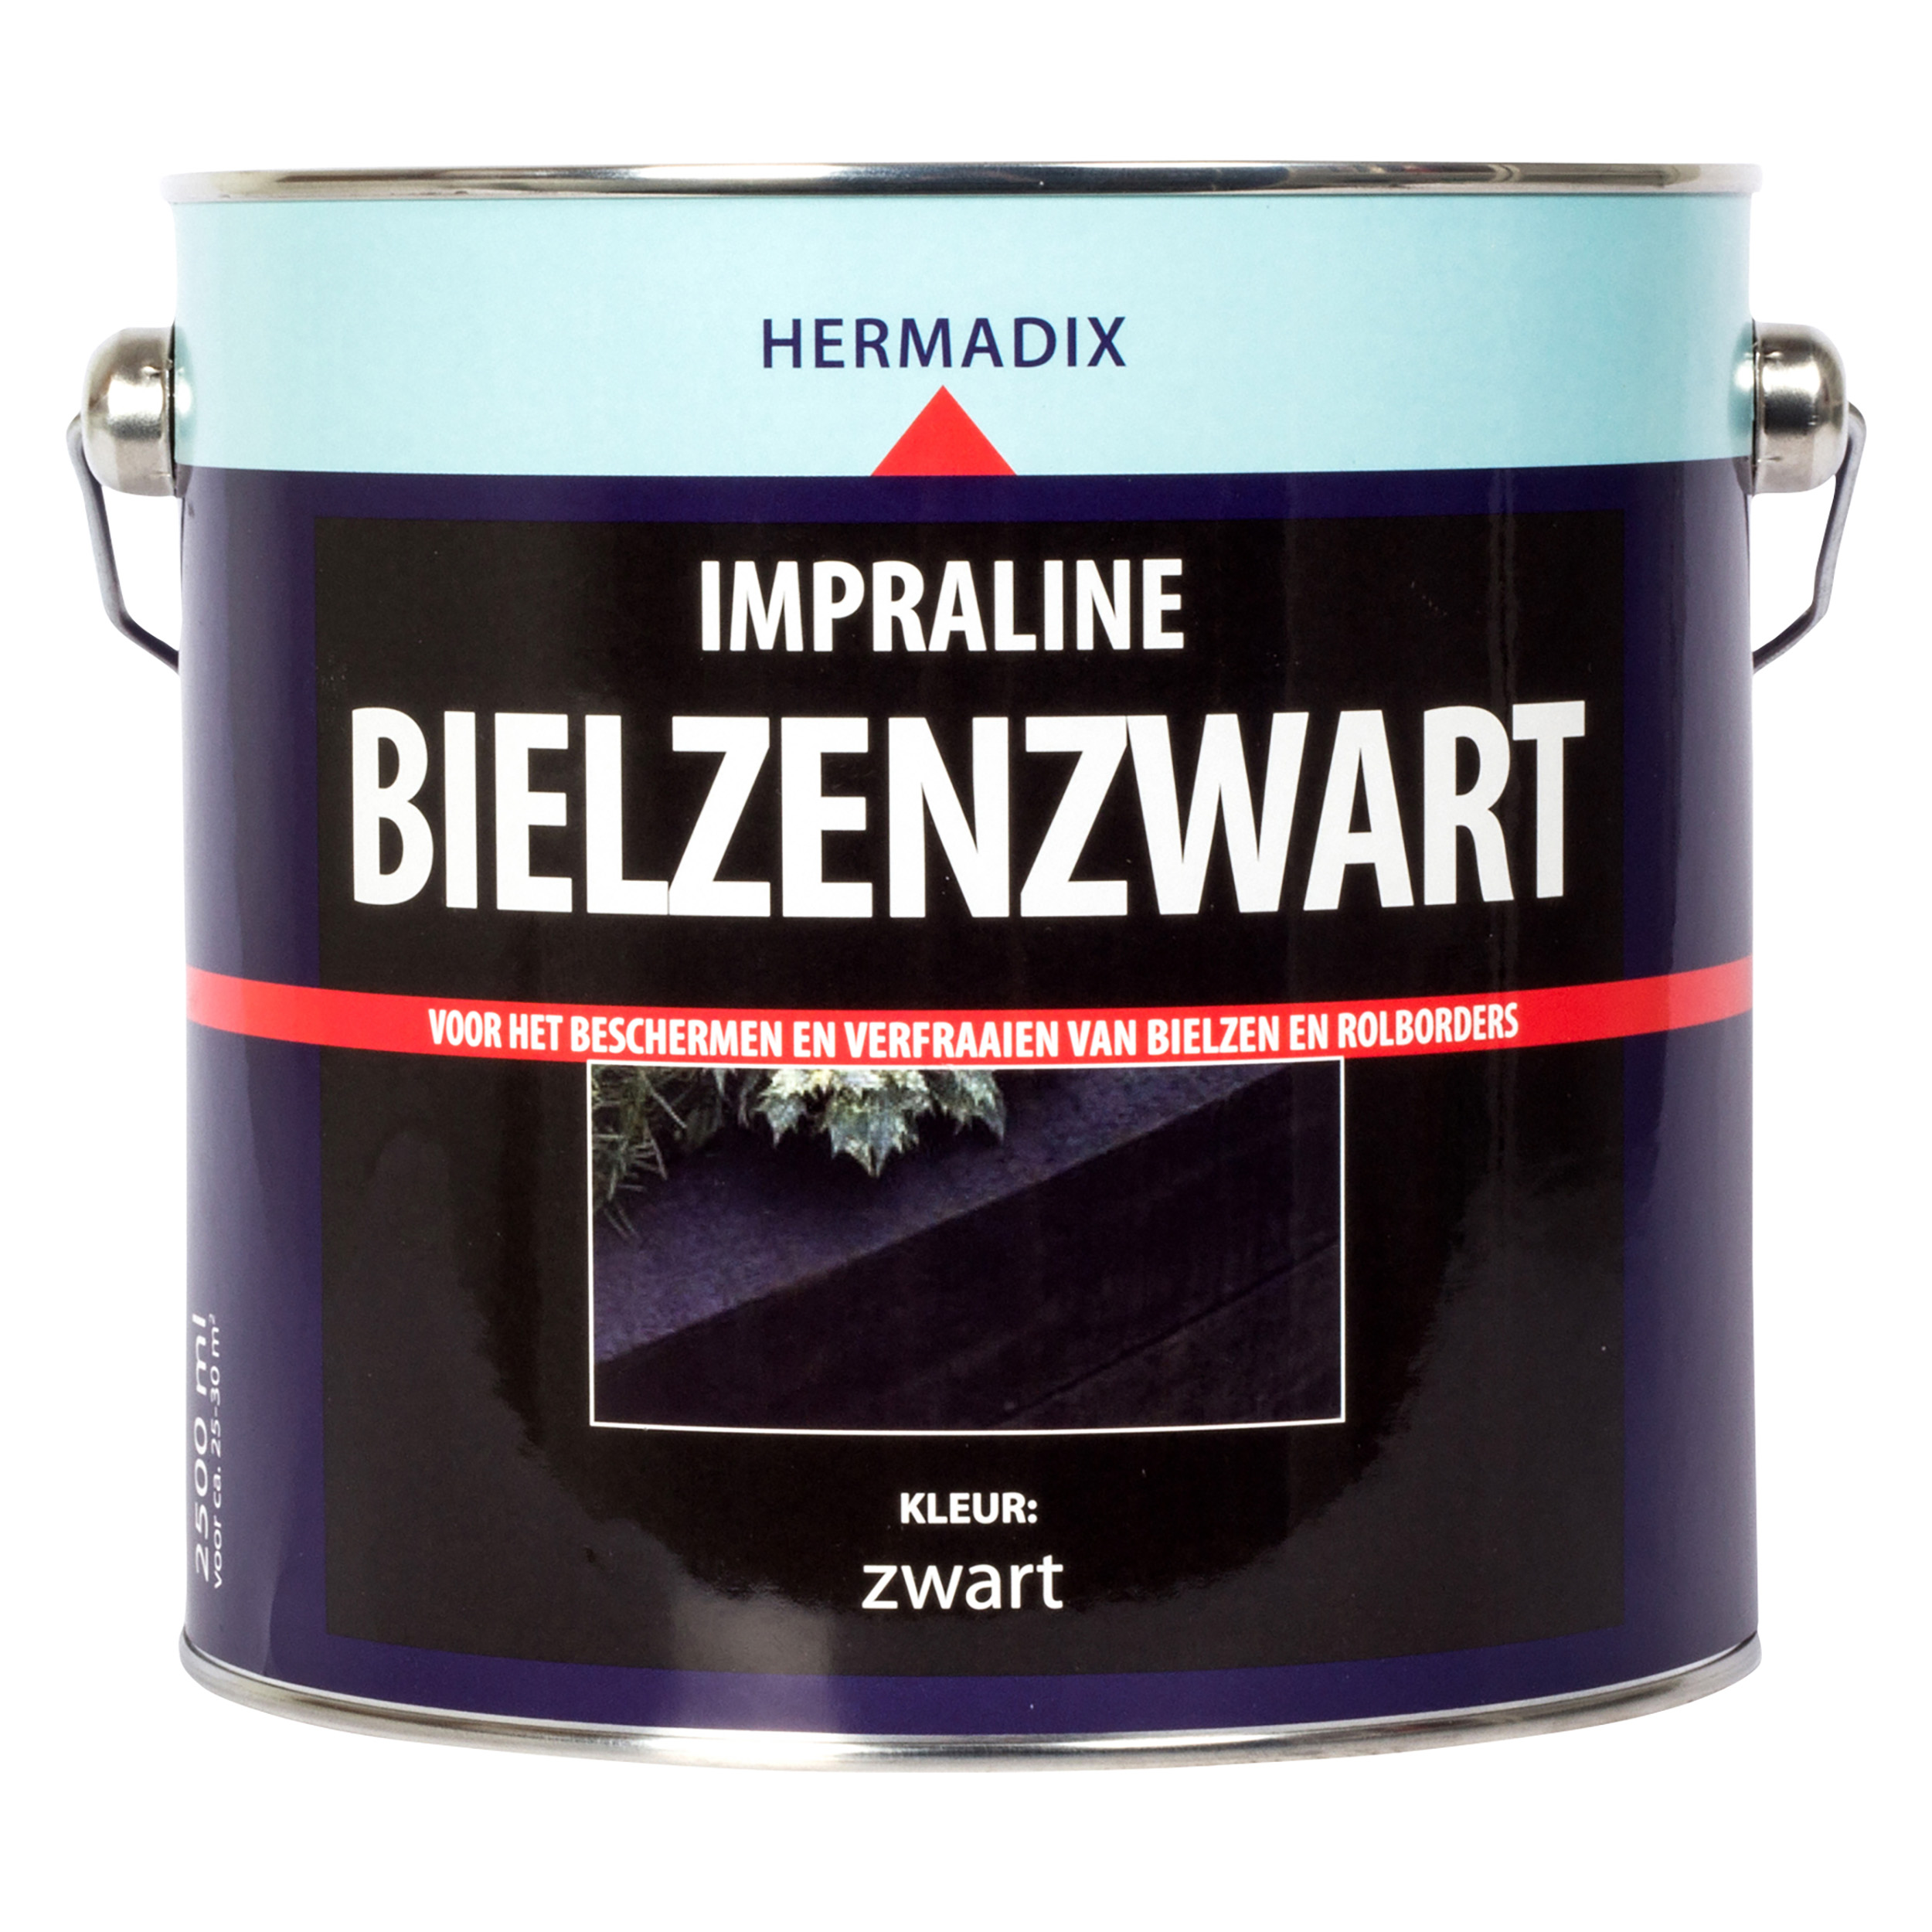 25.224.02 Hermadix  impraline mat - 2500 ml - bielzenzwart - zwart